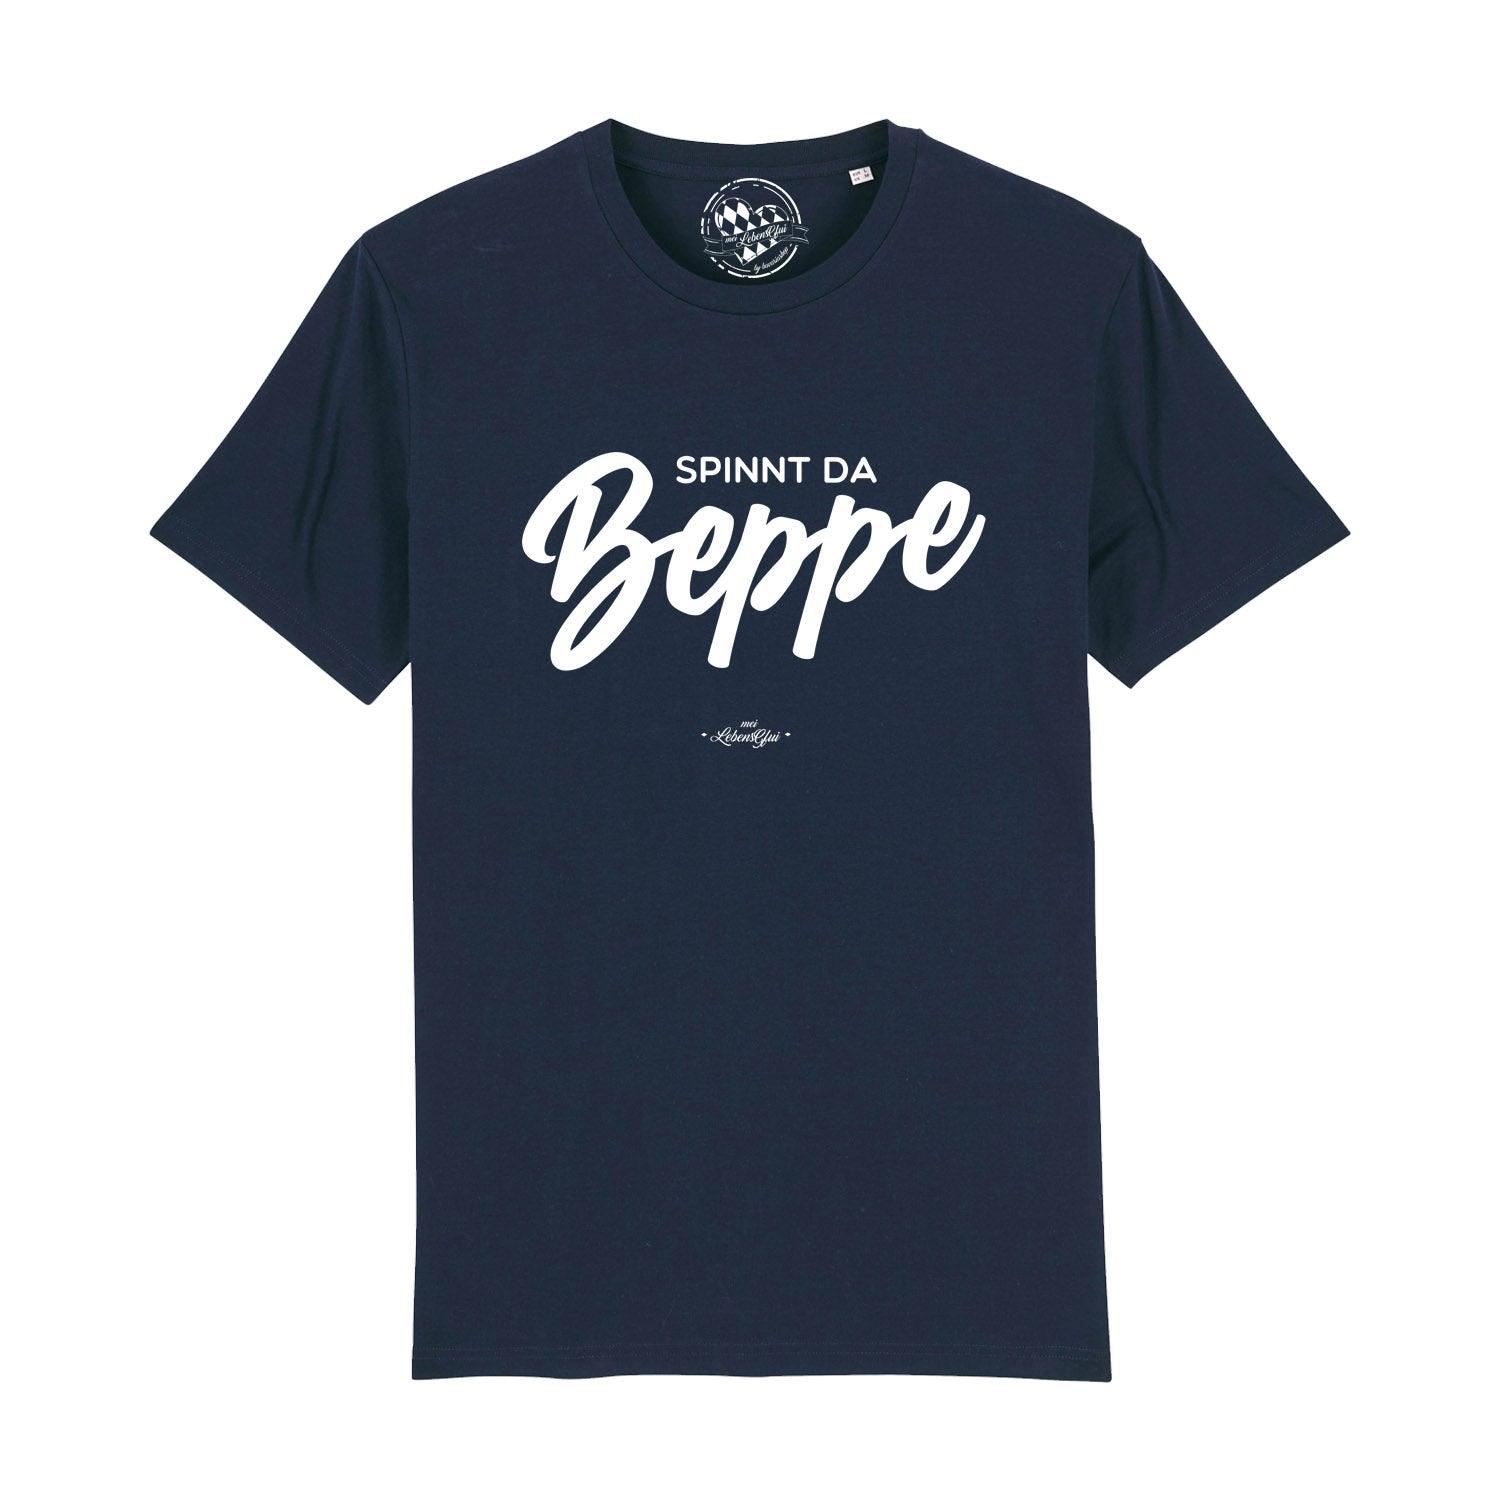 Herren T-Shirt "Spinnt da Beppe" - bavariashop - mei LebensGfui